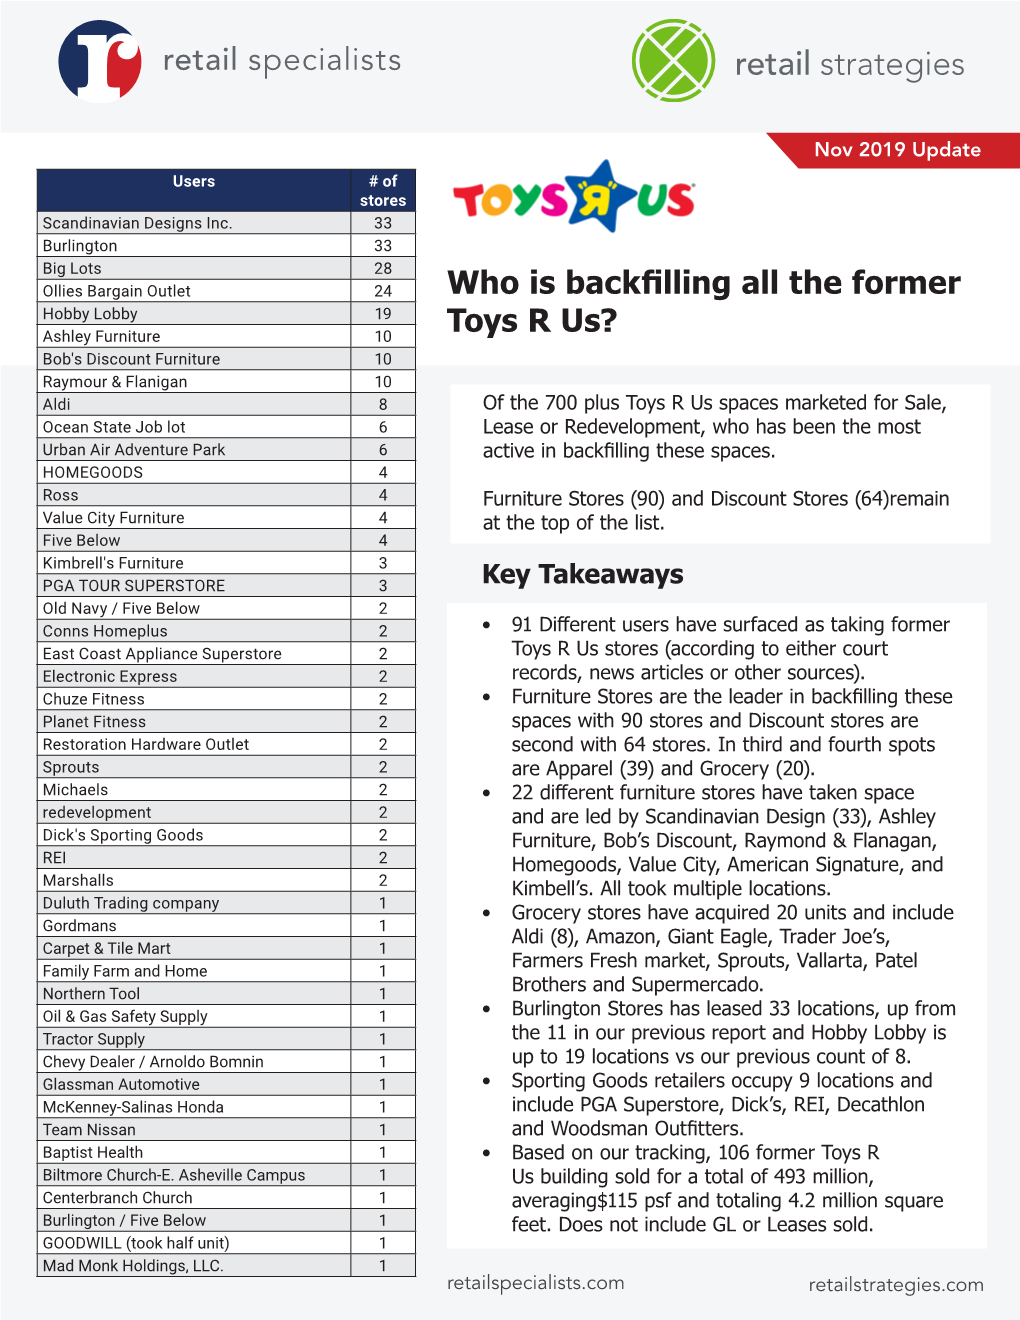 Toys R Us Scorecard User # Locations Use Scandinavian Designs Inc